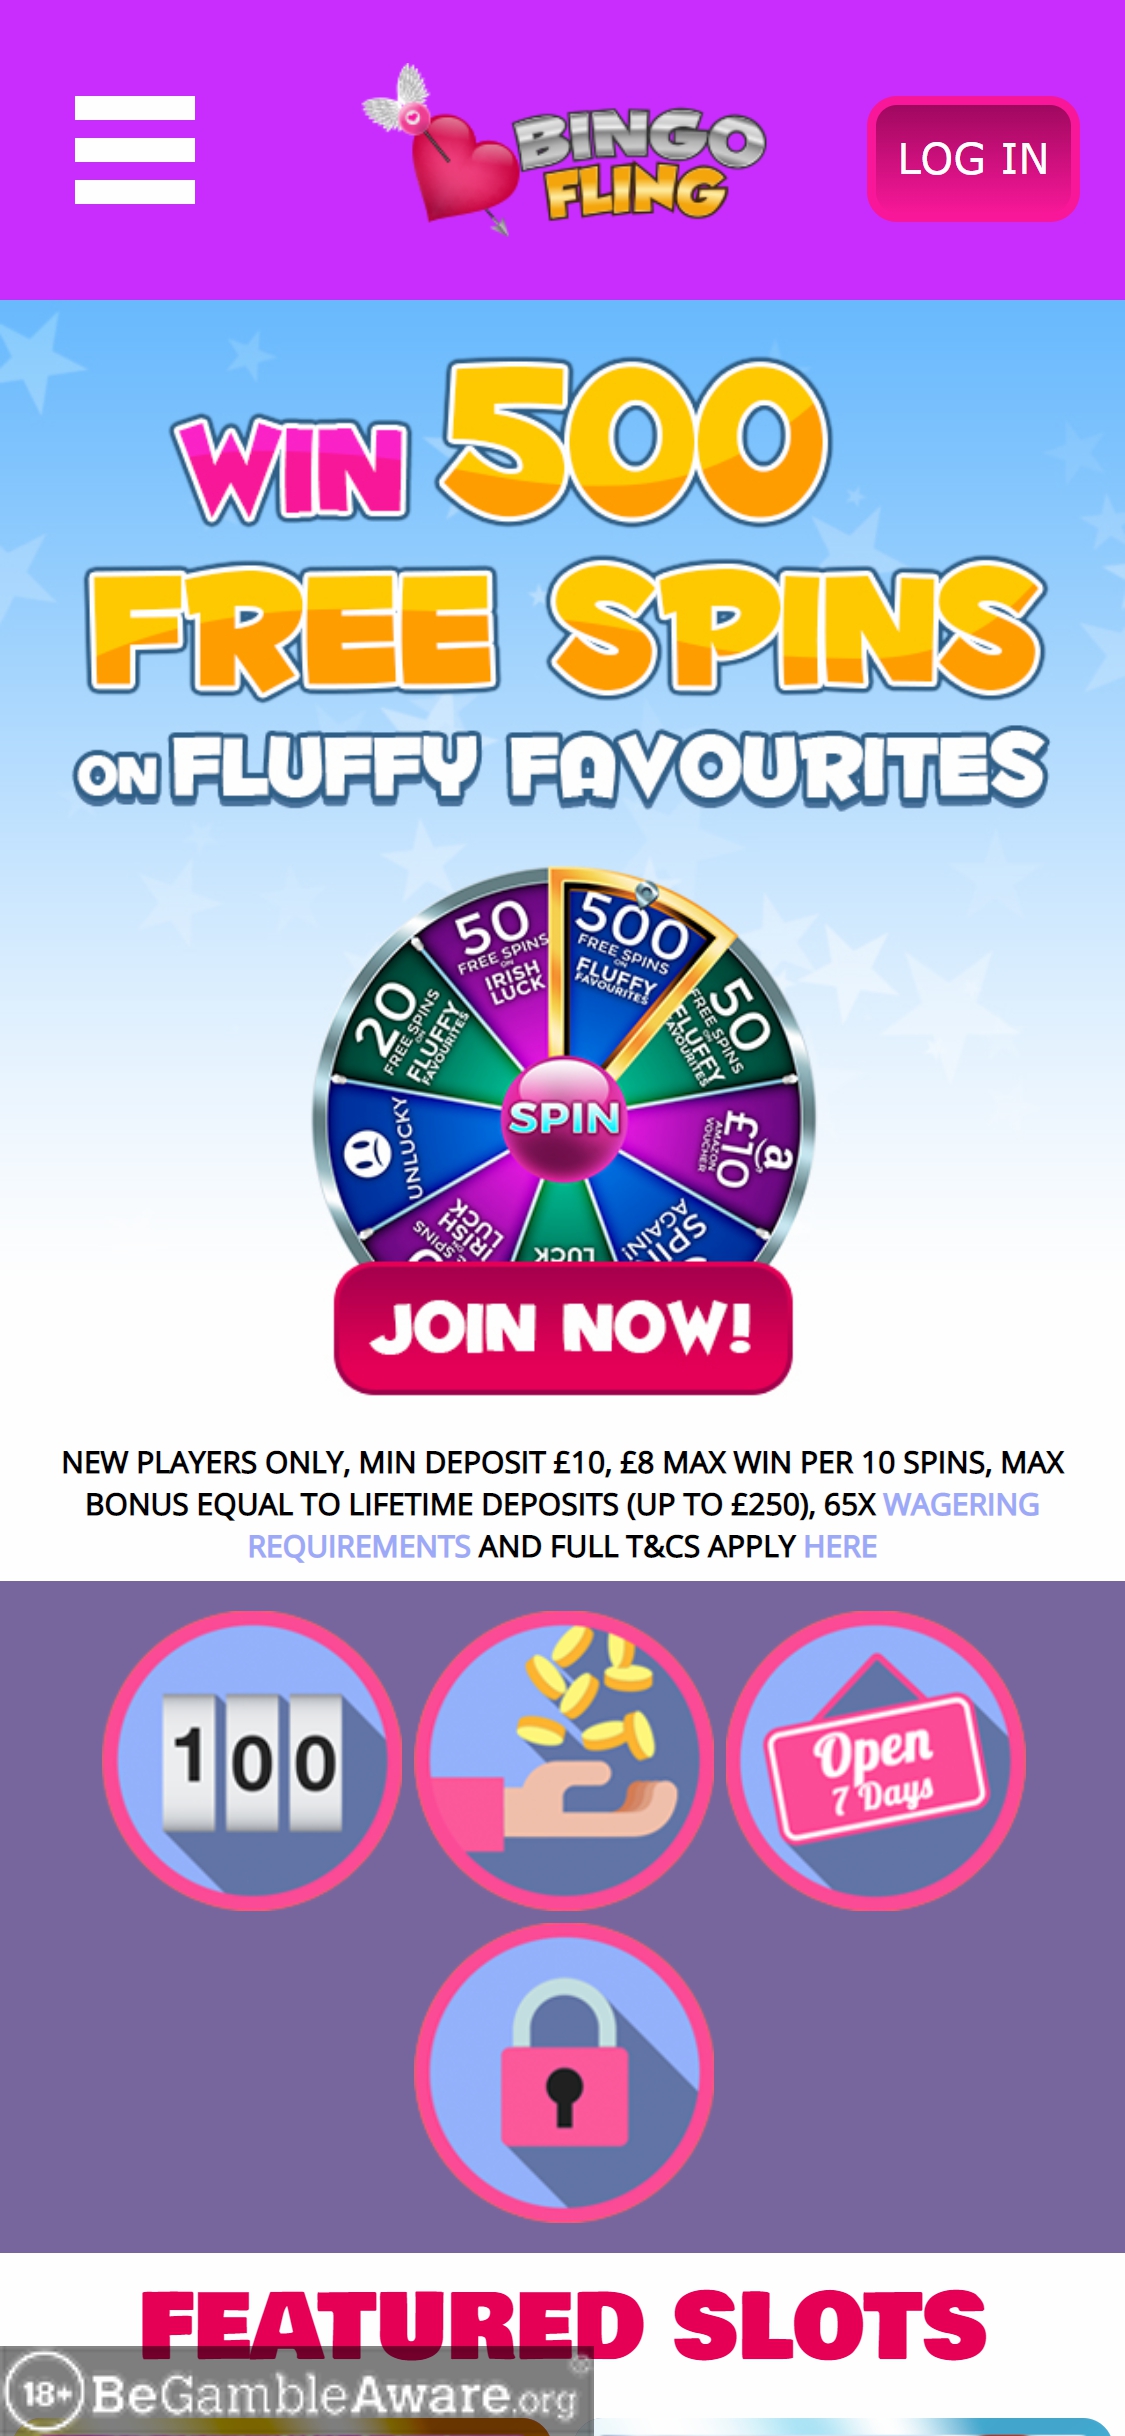 Bingo Fling Casino Mobile Review